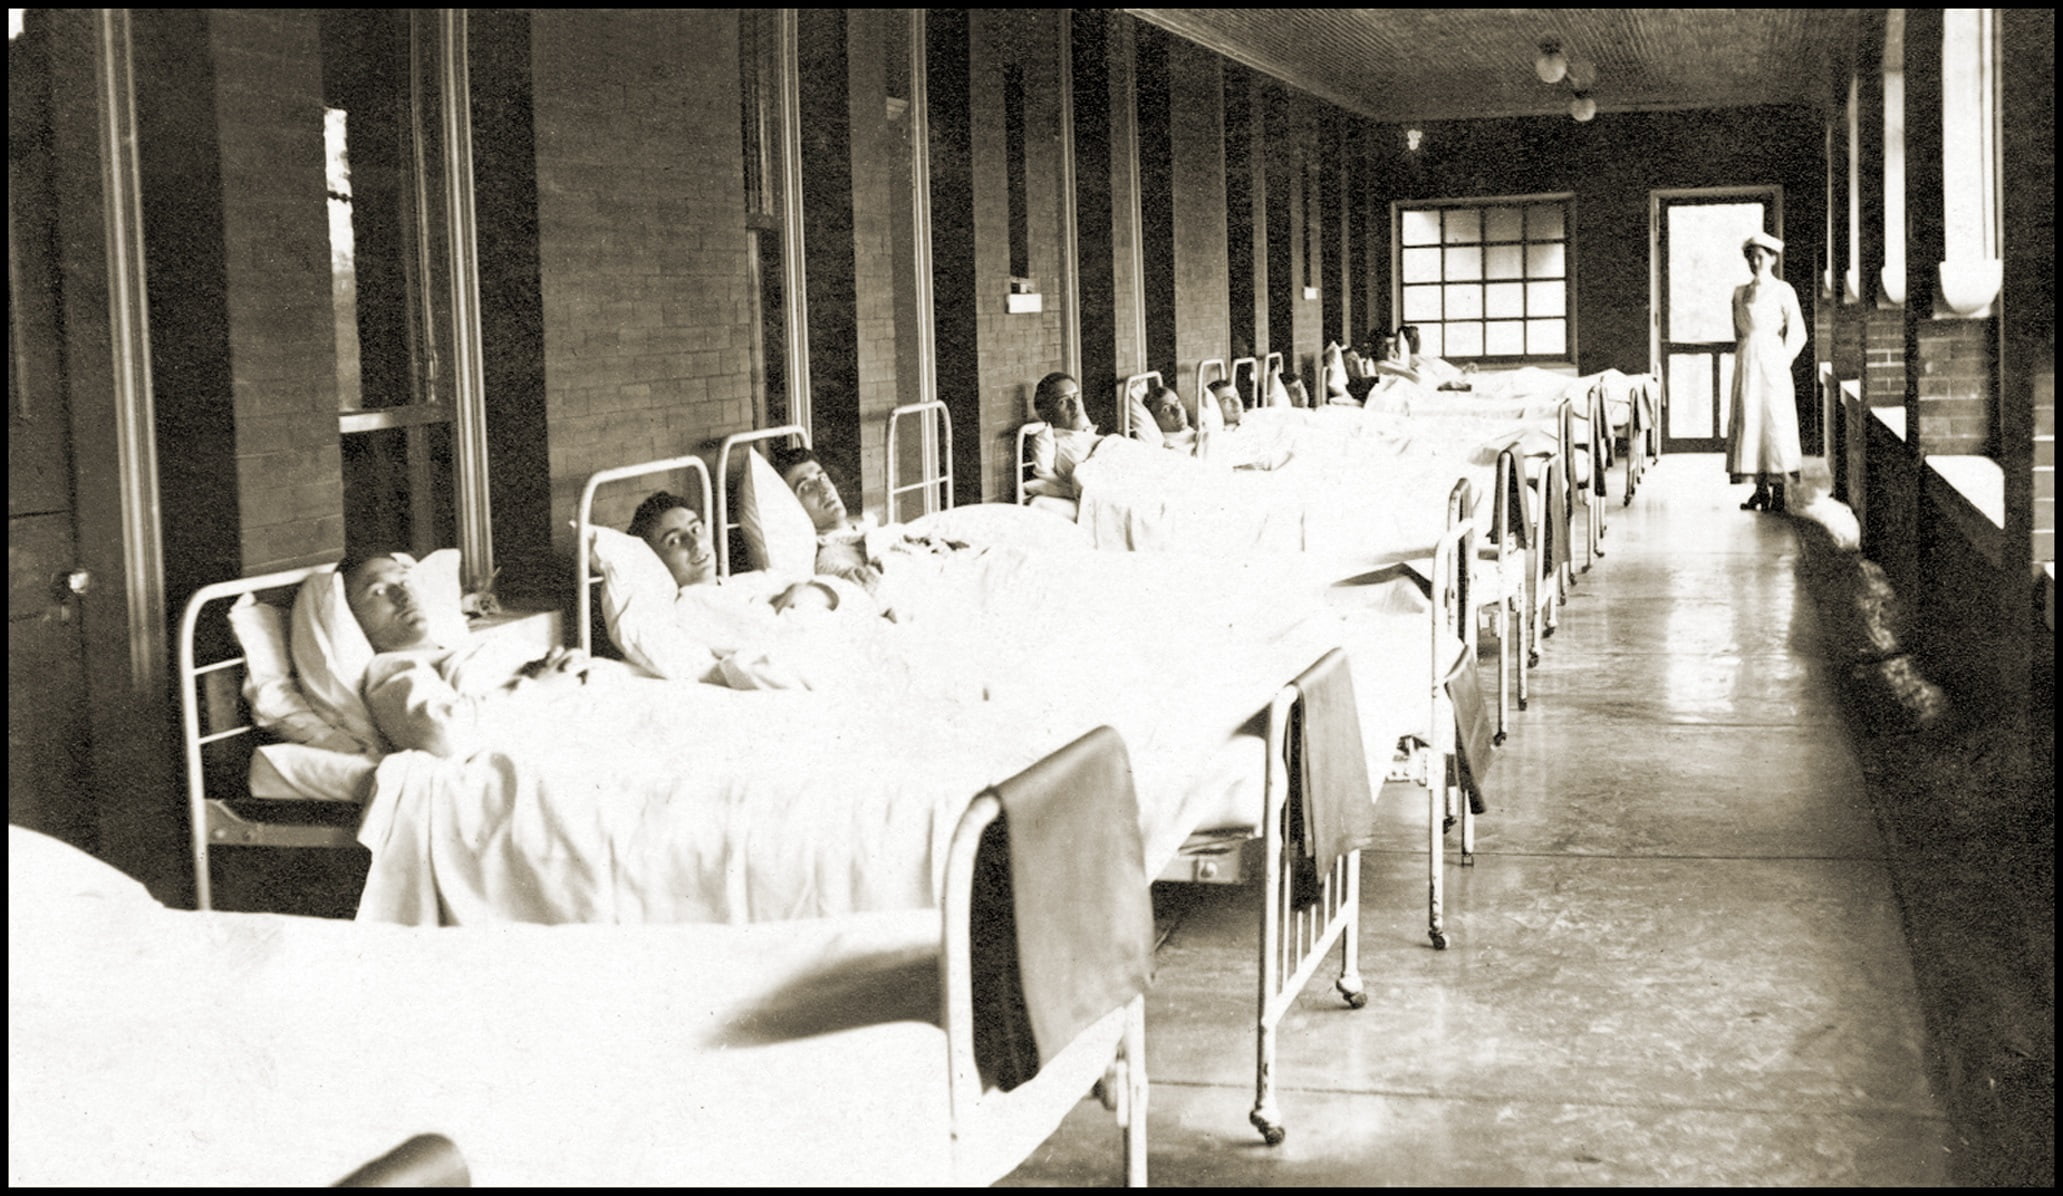 Фото с госпиталя. Госпиталь 19 века Англия. Госпиталь в Англии.